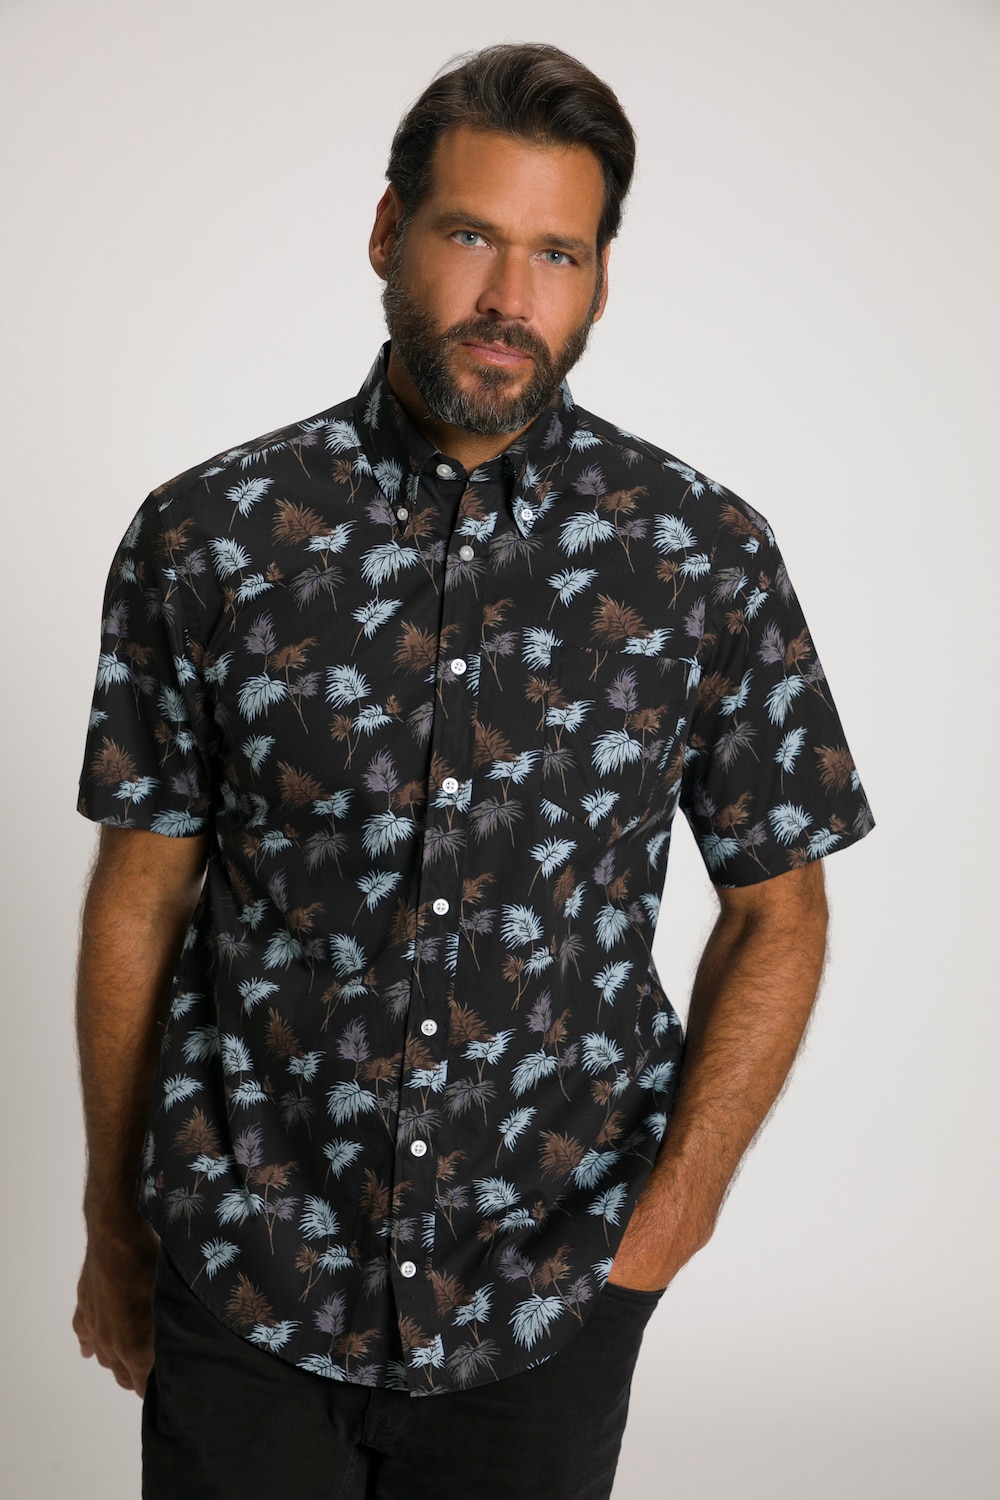 Plus Size Short Sleeve Palm Print Shirt, Man, brown, size: 3XL, cotton, JP1880